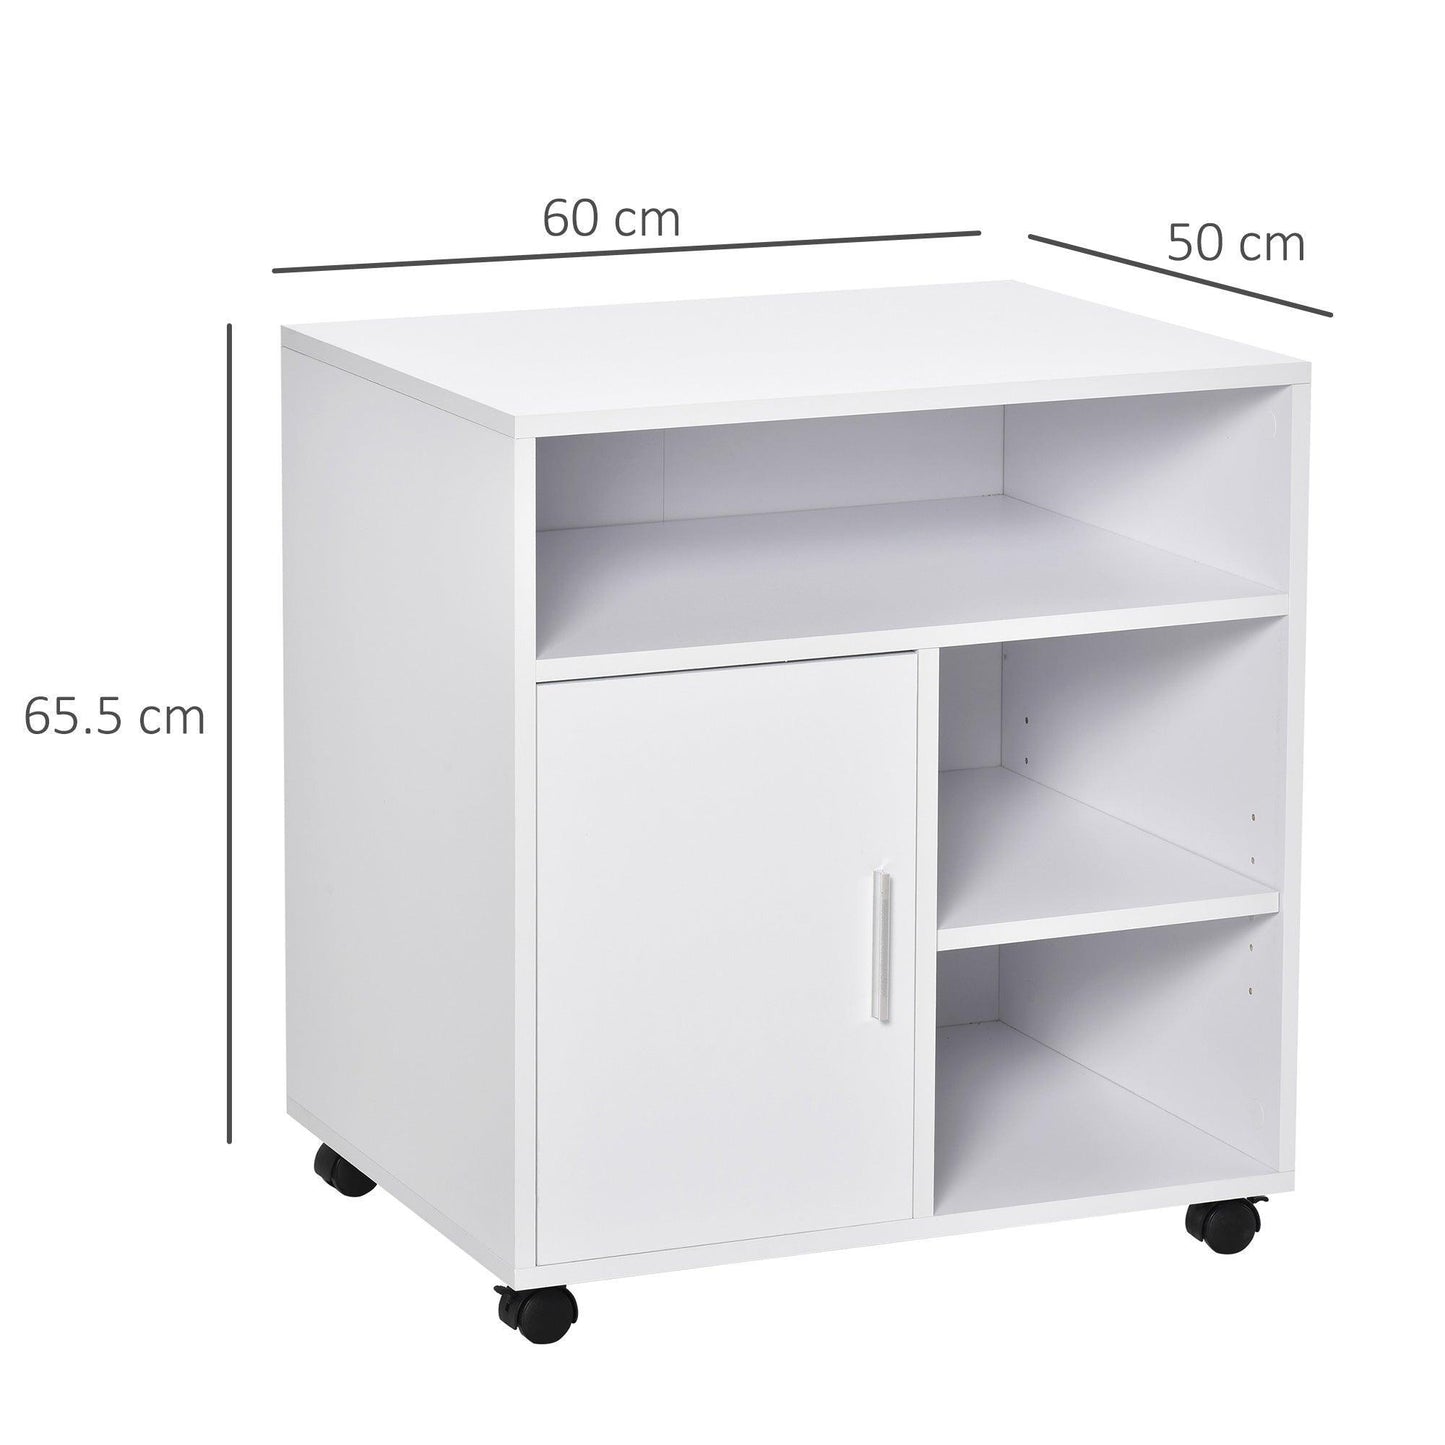 HOMCOM White Printer Stand with Storage - Compact & Mobile - ALL4U RETAILER LTD